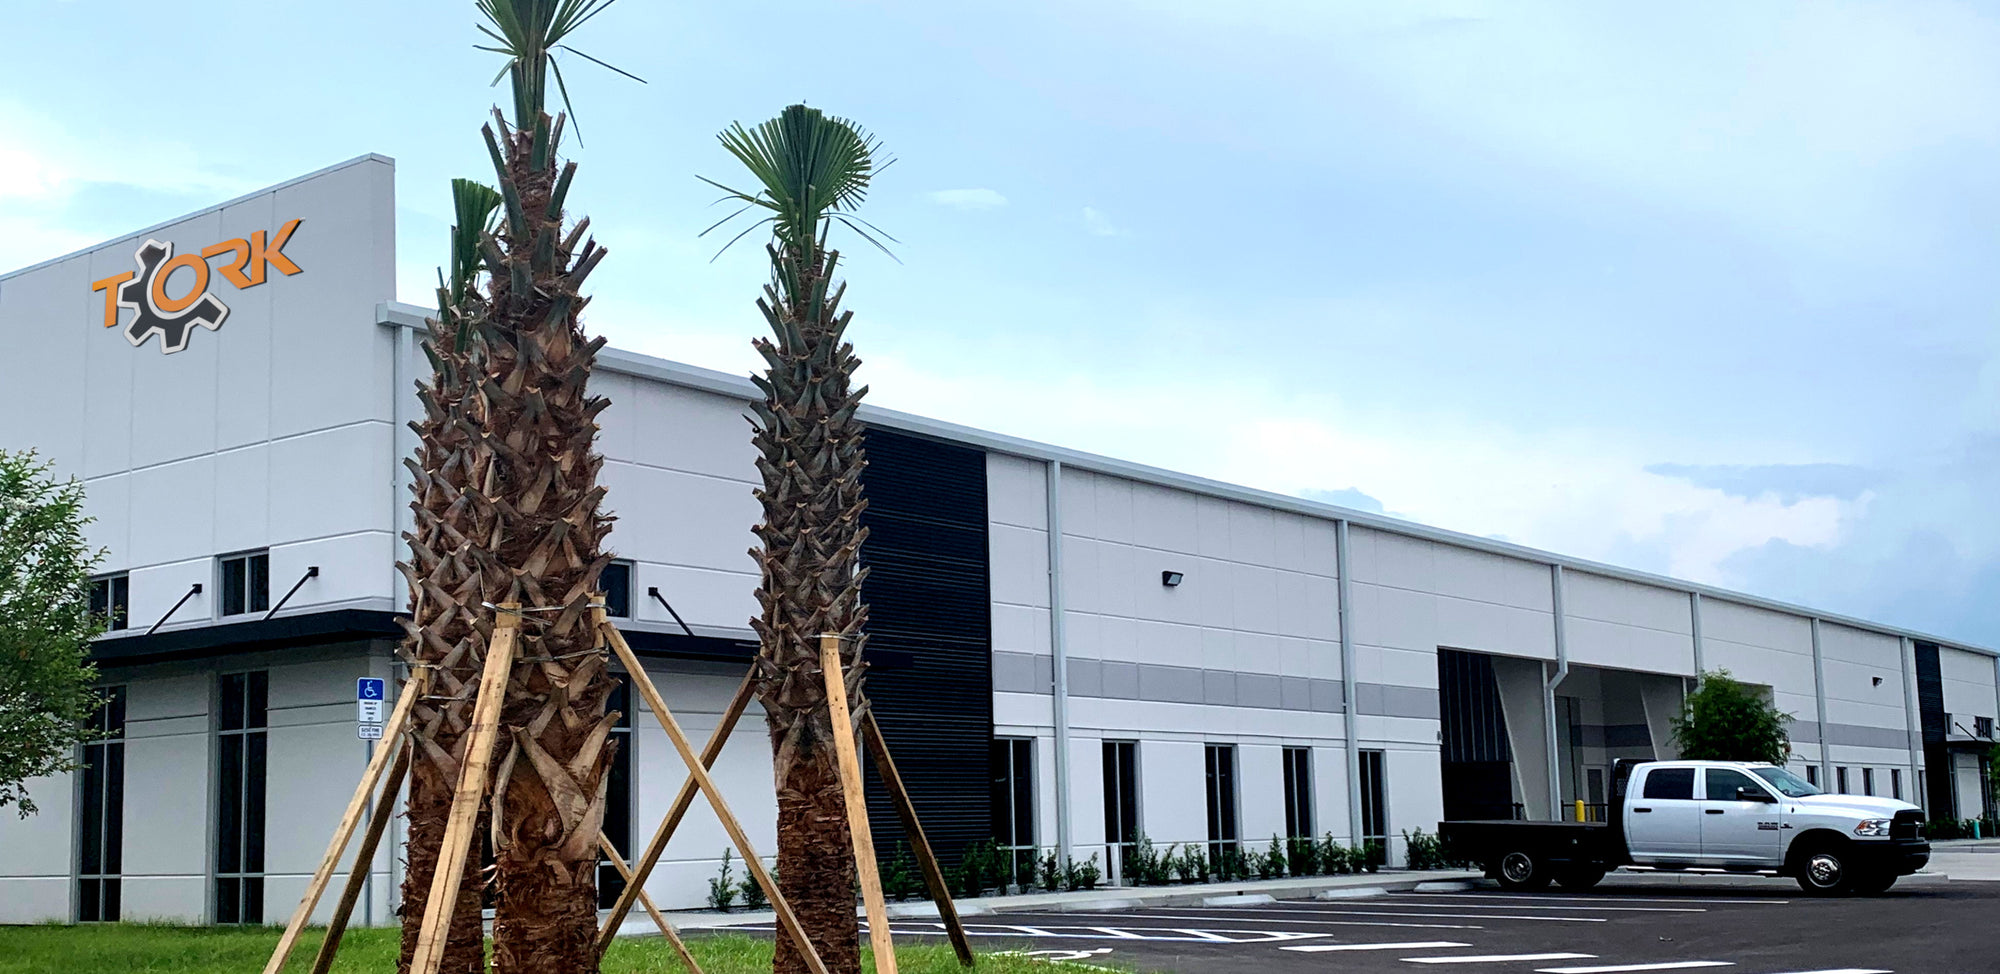 Tork CNC facility Sanford, FL